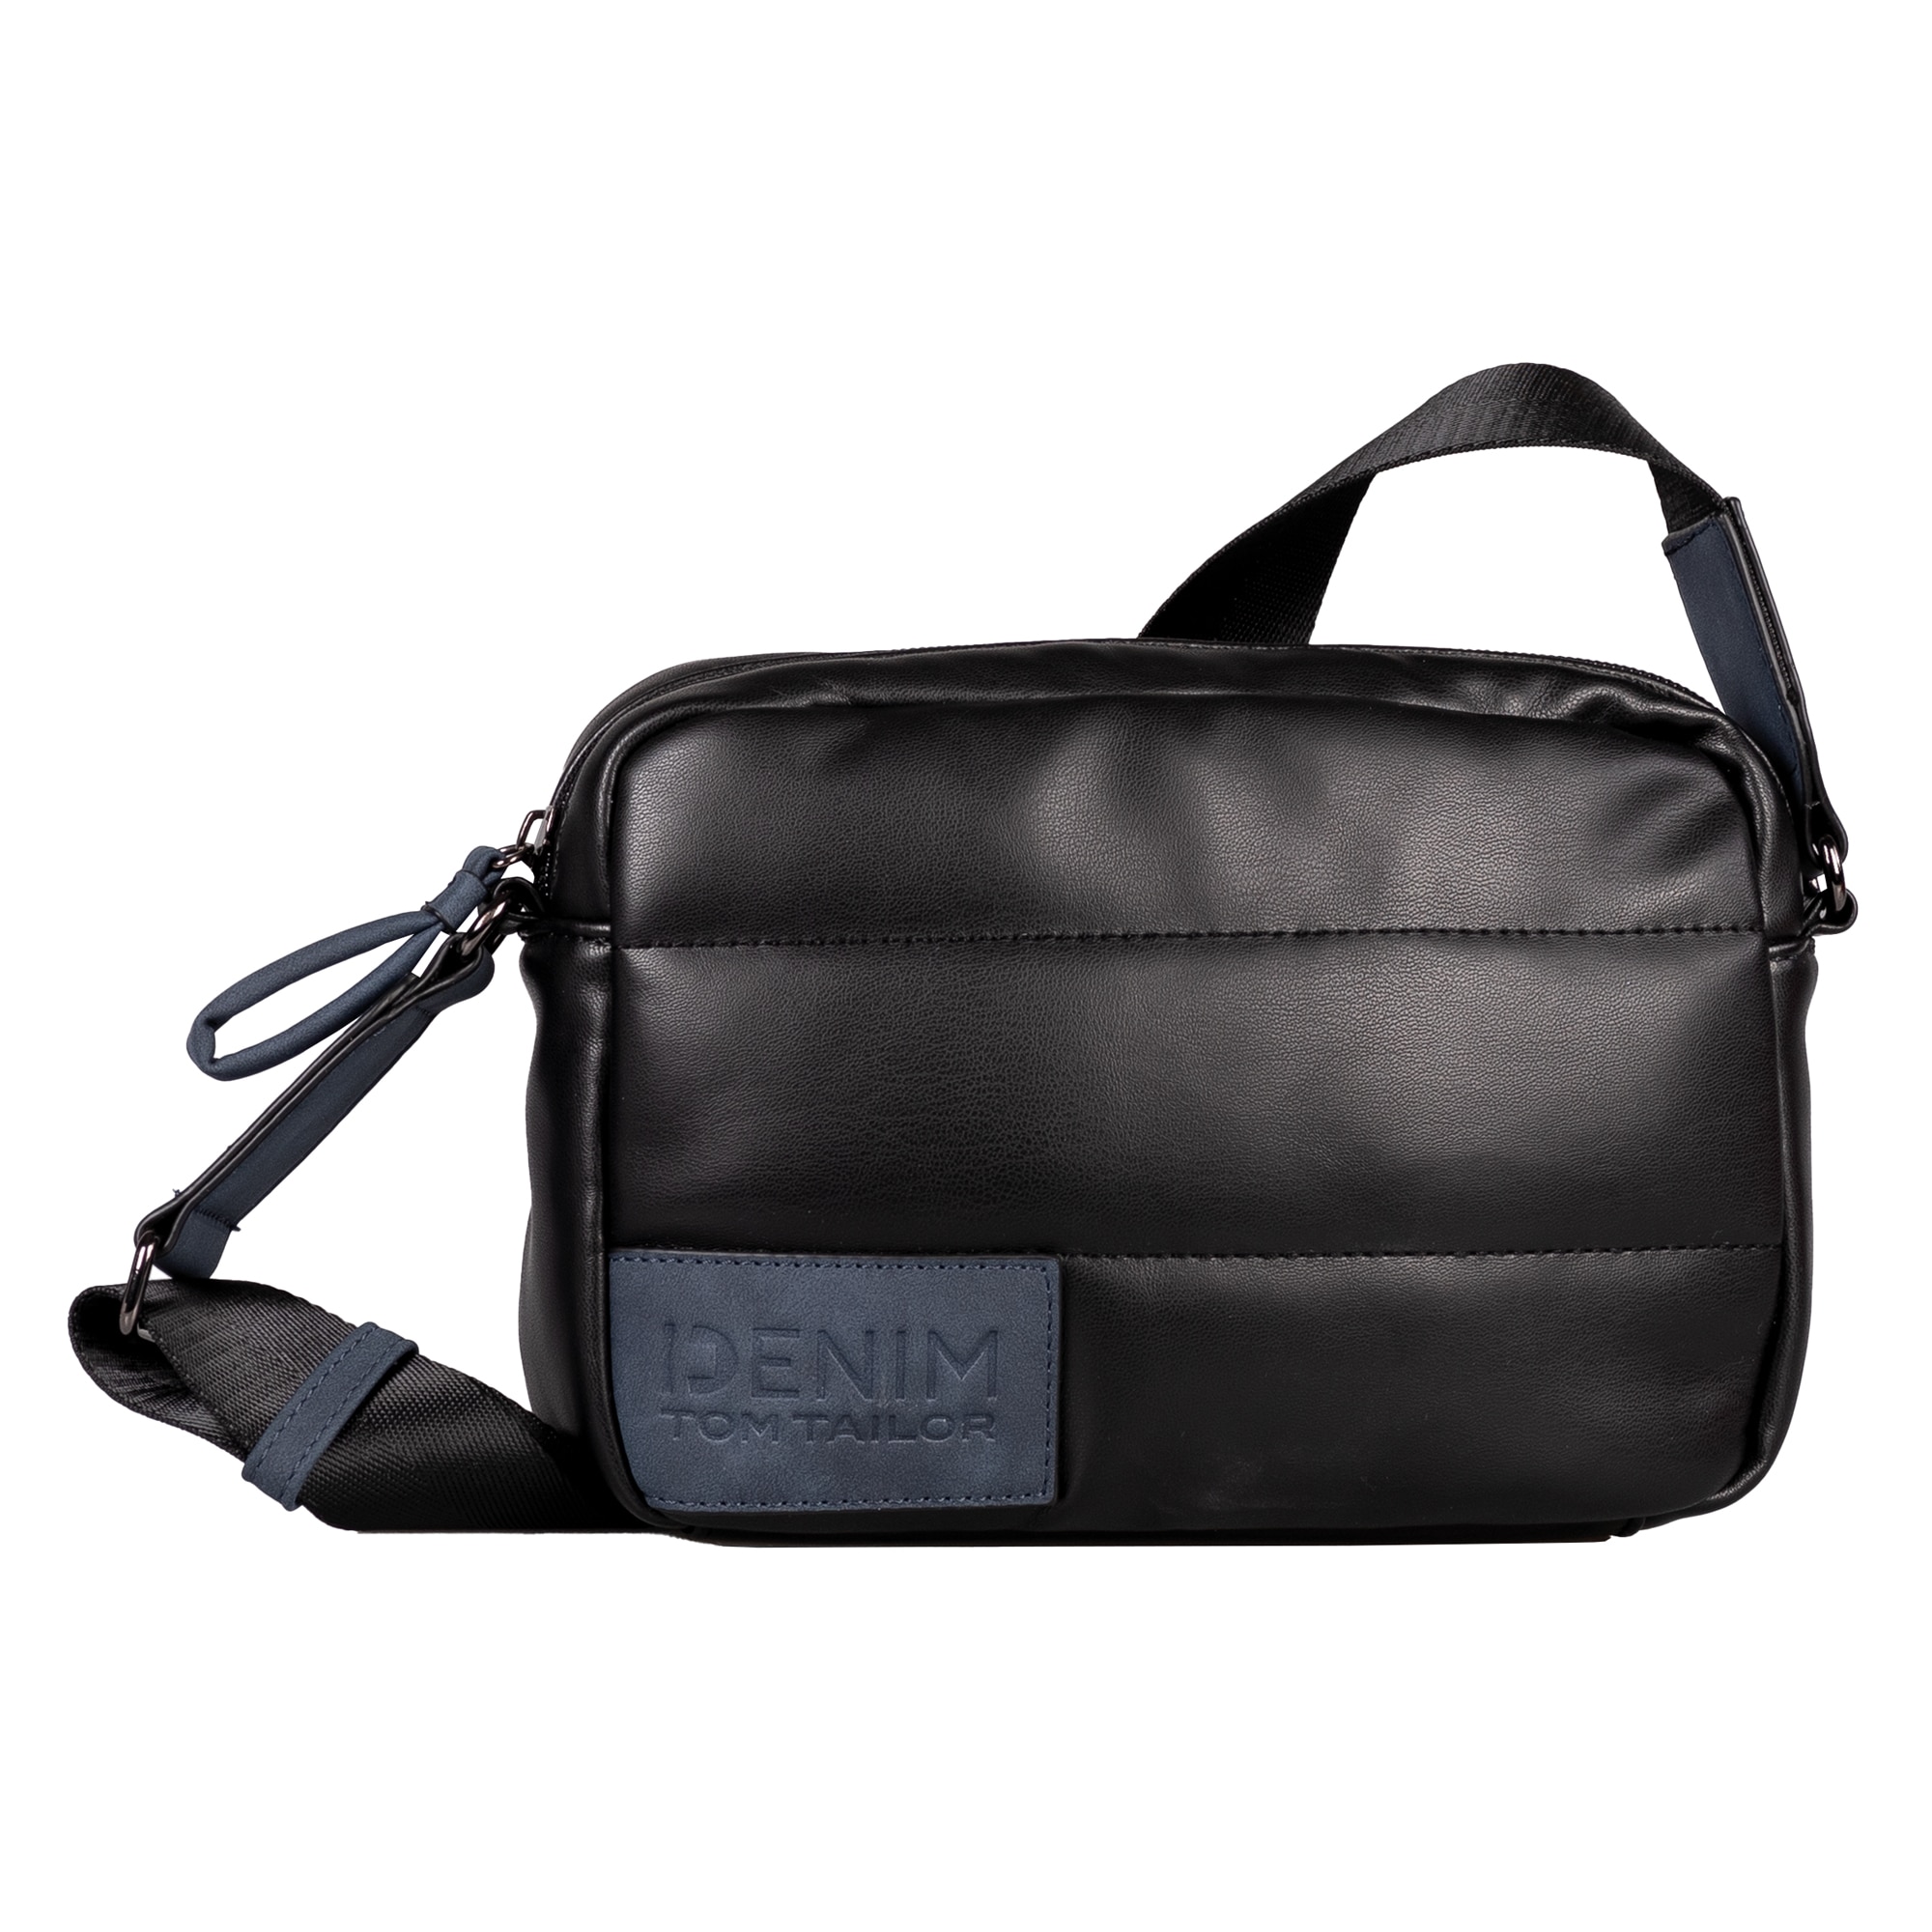 TOM TAILOR Denim Mini Bag »Maly Camera bag«, im praktischen Design